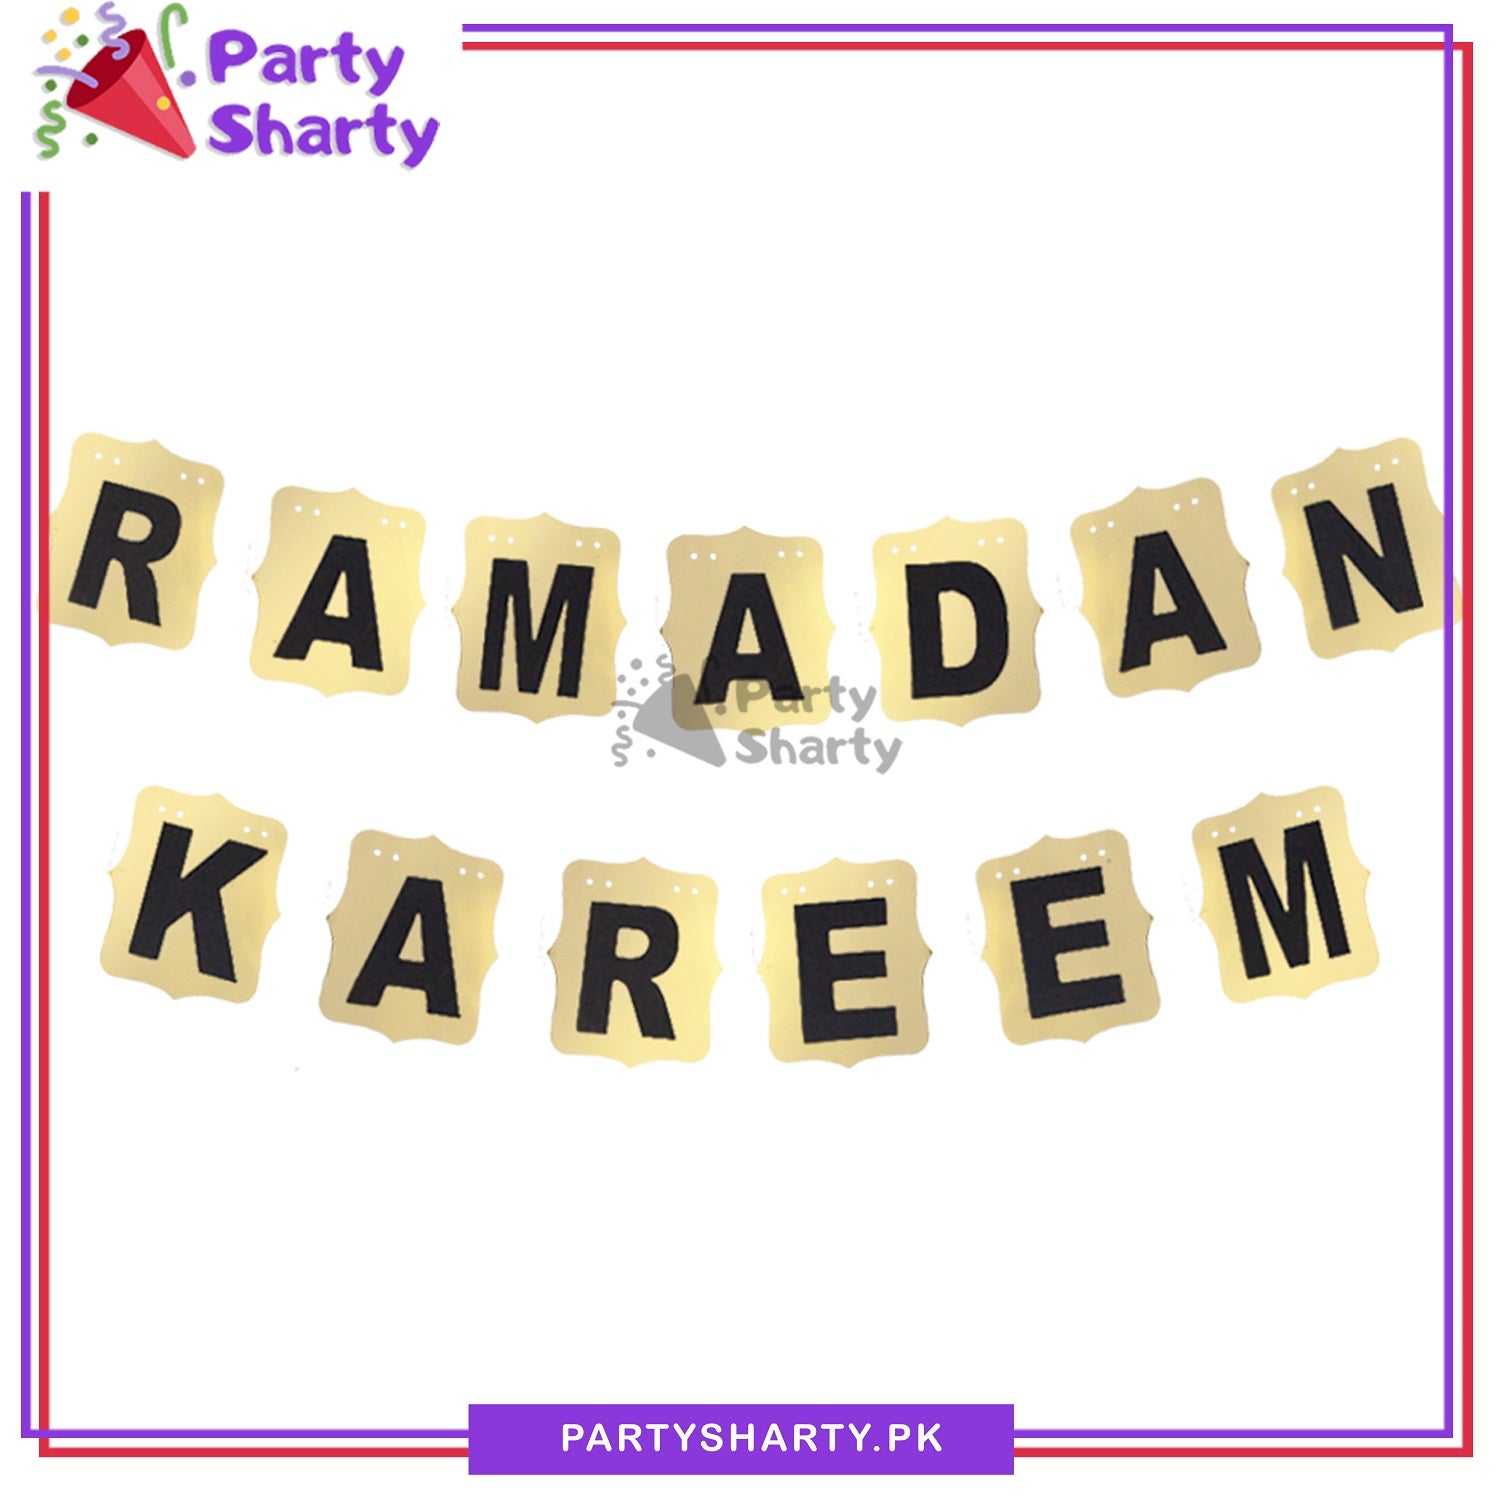 Golden with Black Ramadan Kareem Banner For Ramadan Iftar Party Decoration and Celebration